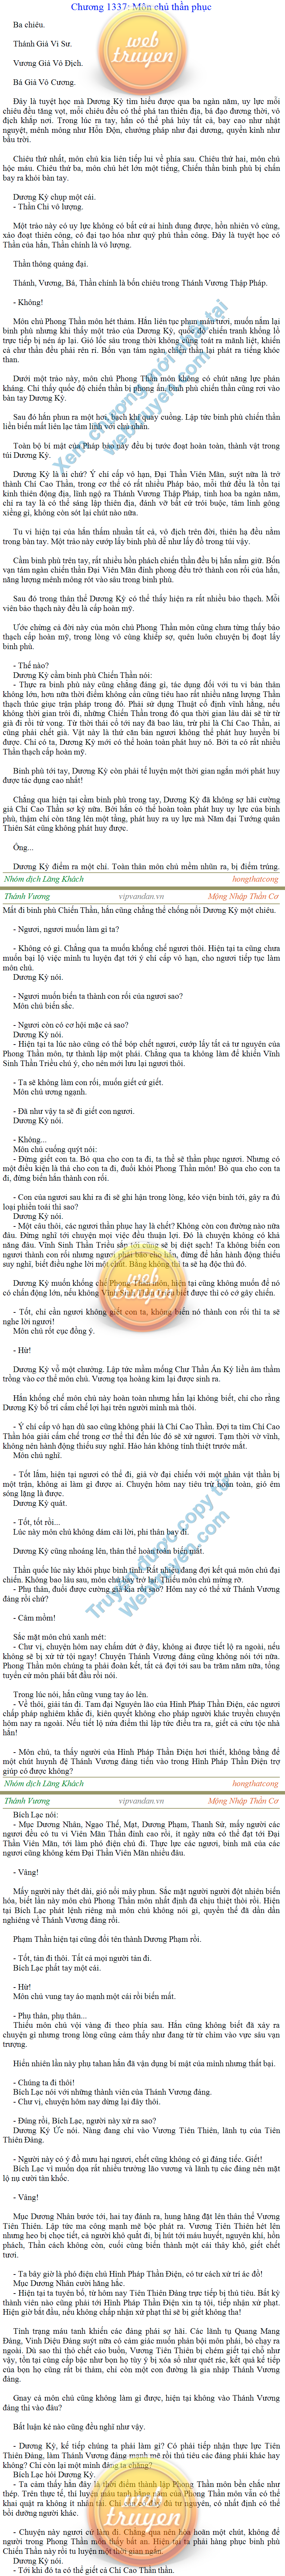 Thanh-vuong-1337.png